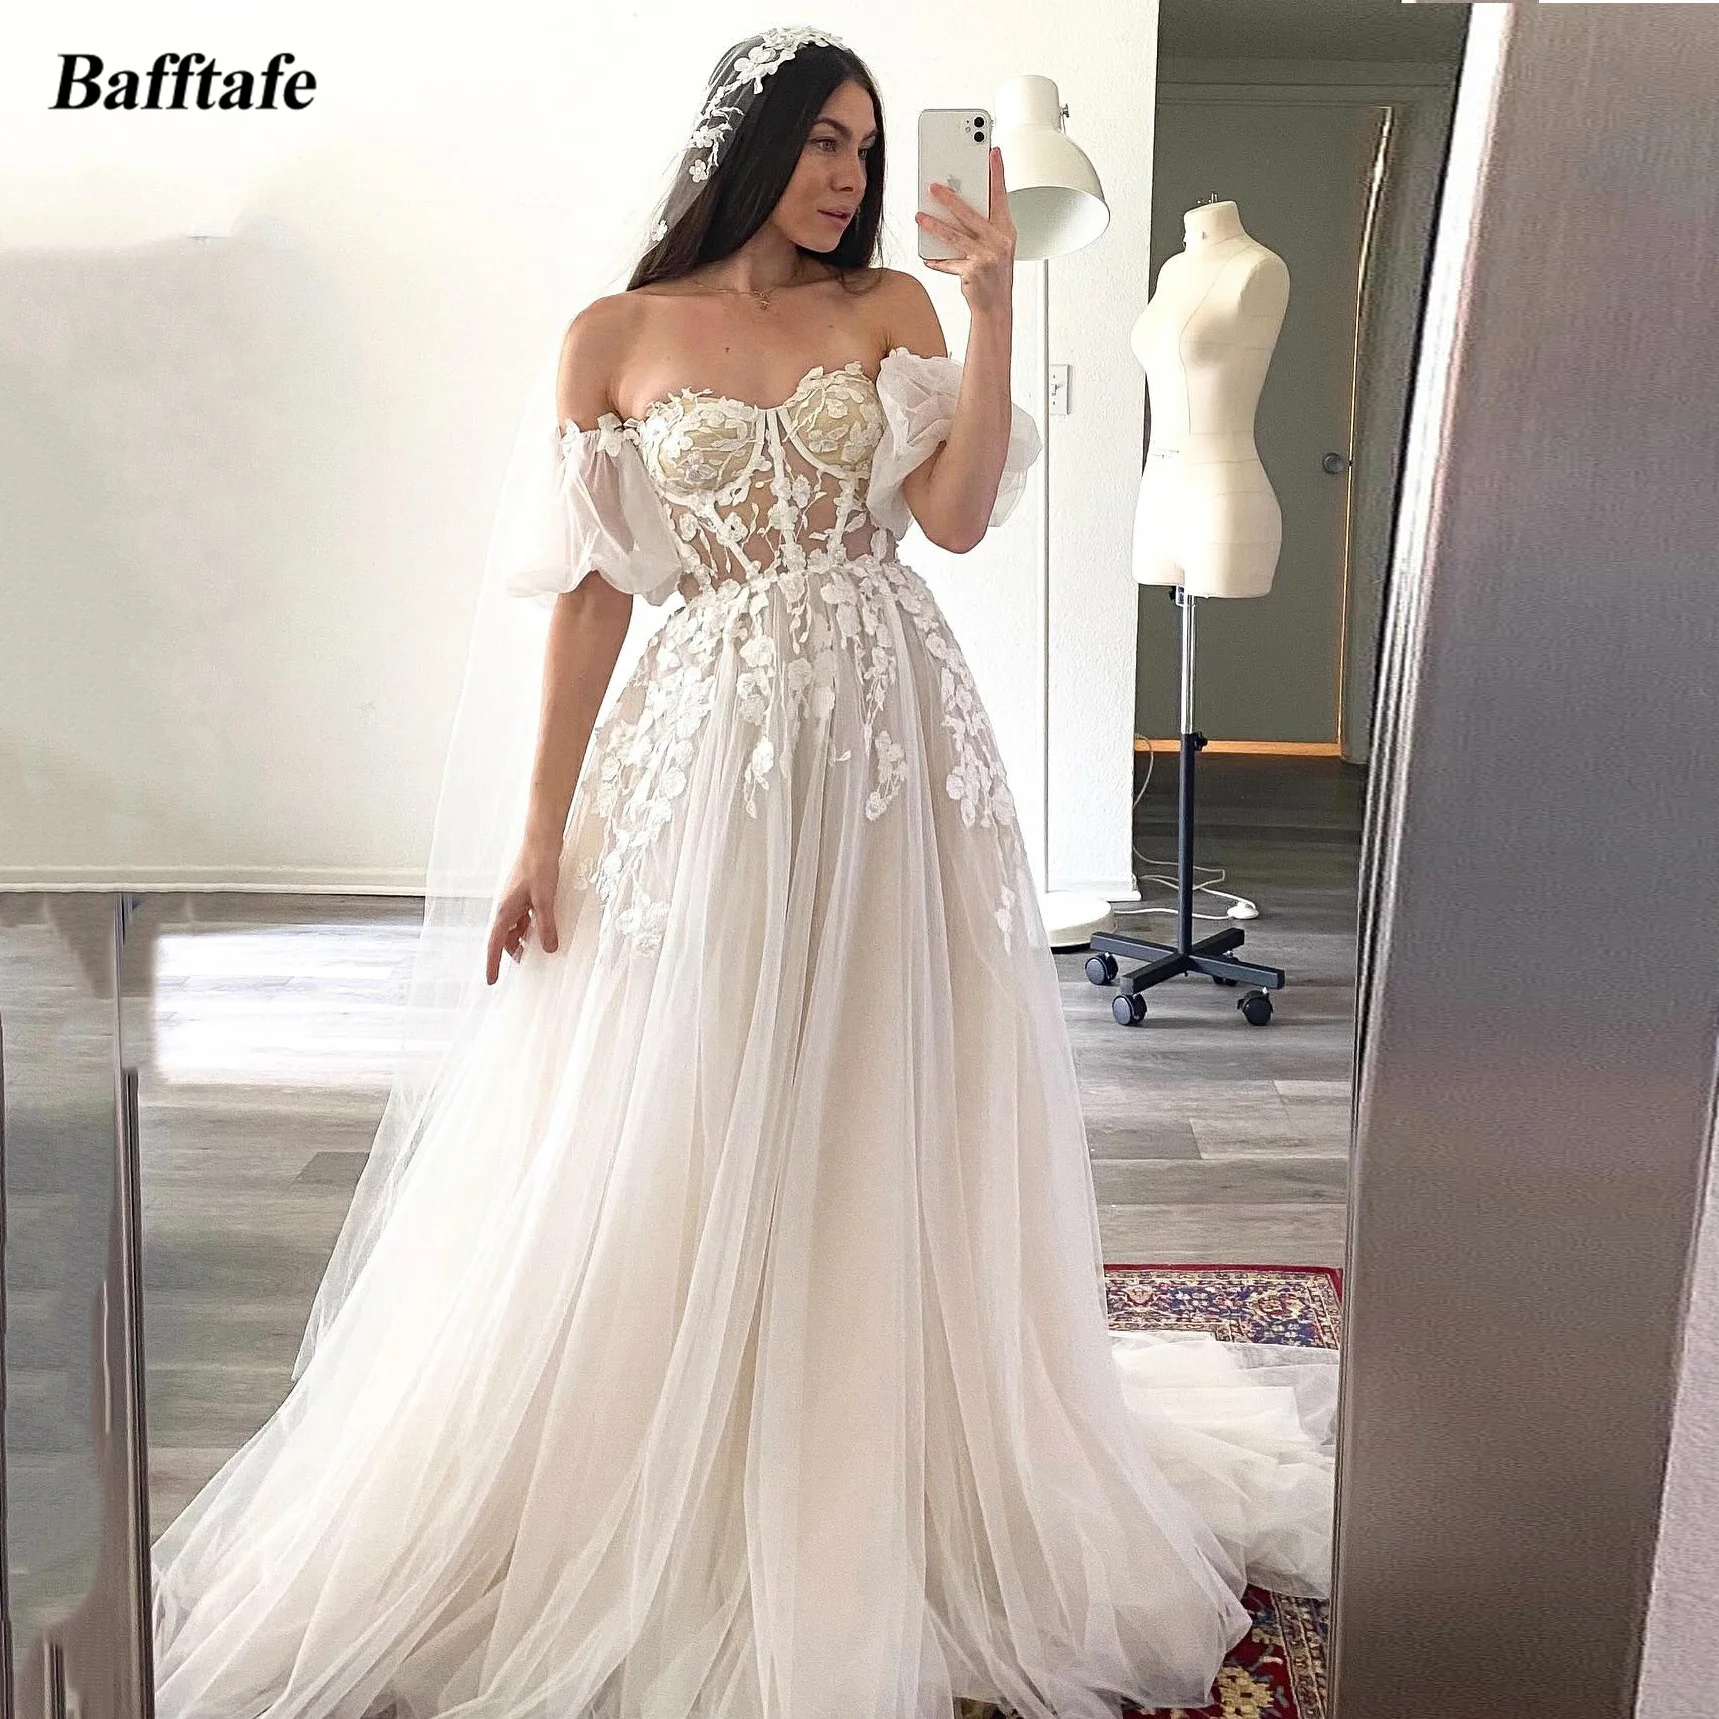 

Bafftafe A Line Appliques Lace Wedding Bride Dresses Puff Short Sleeves Boho Bridal Gowns Transparent Top Formal Party Dress